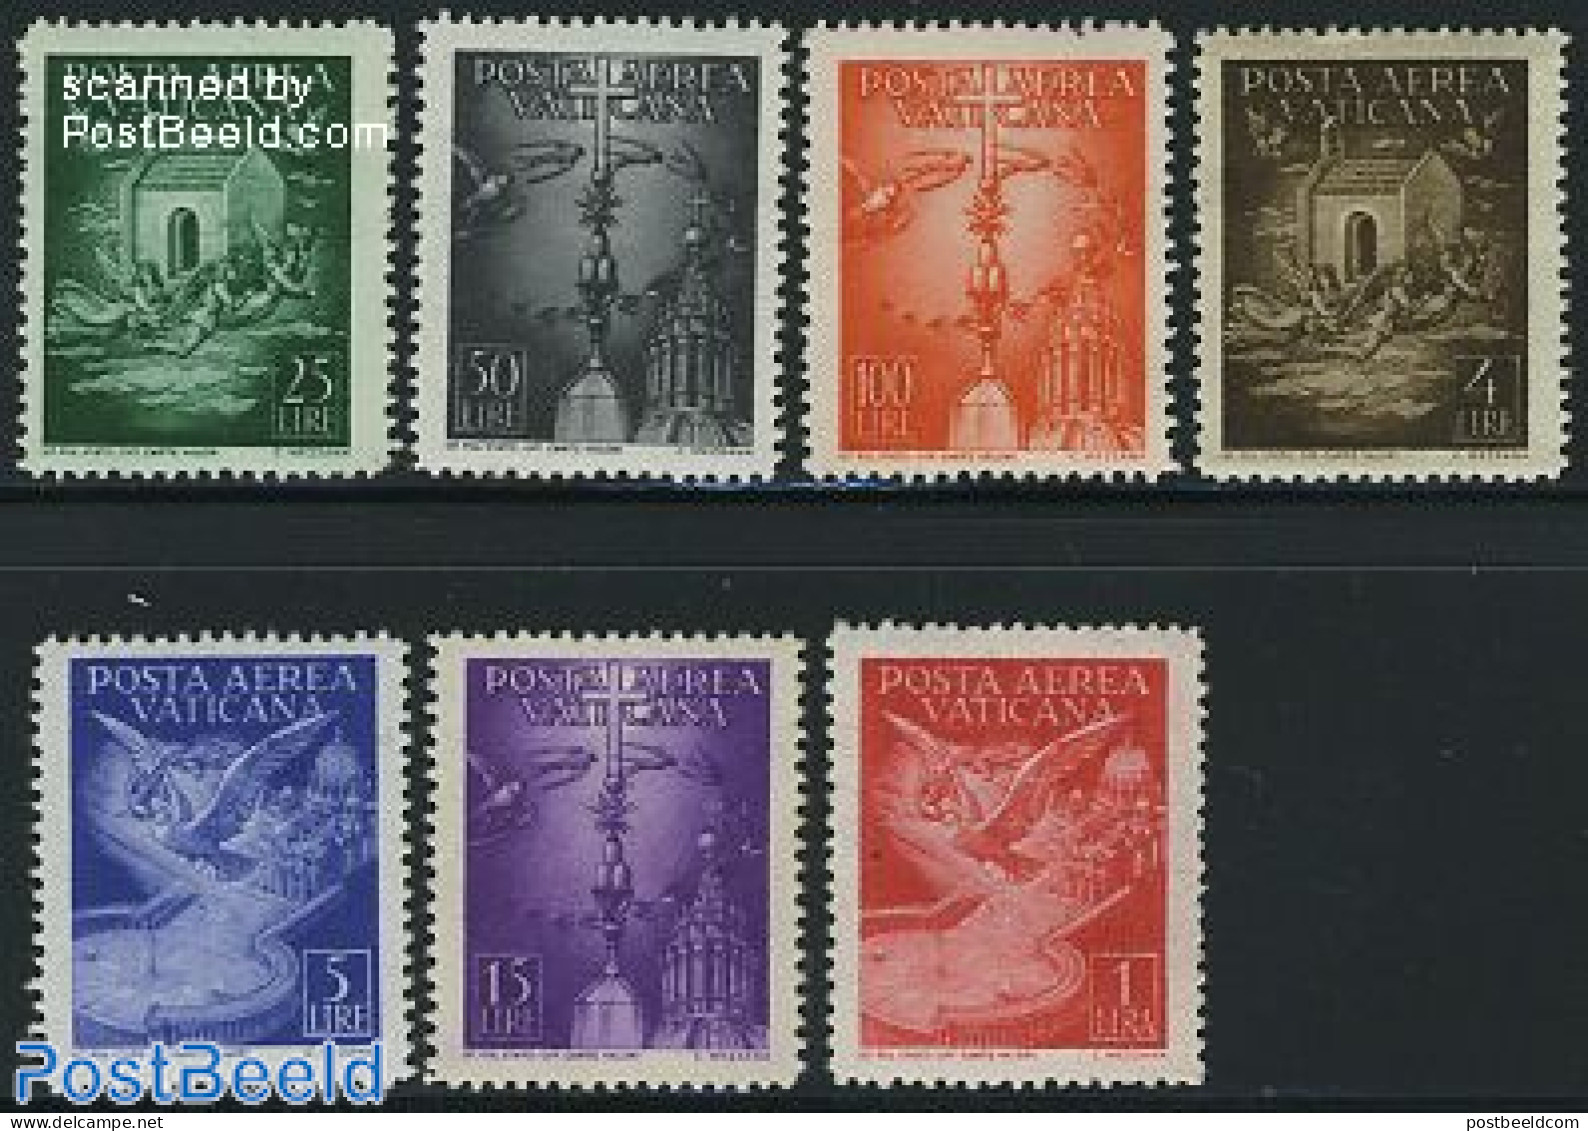 Vatican 1947 Airmail Definitives 7v, Mint NH, Nature - Birds - Nuovi